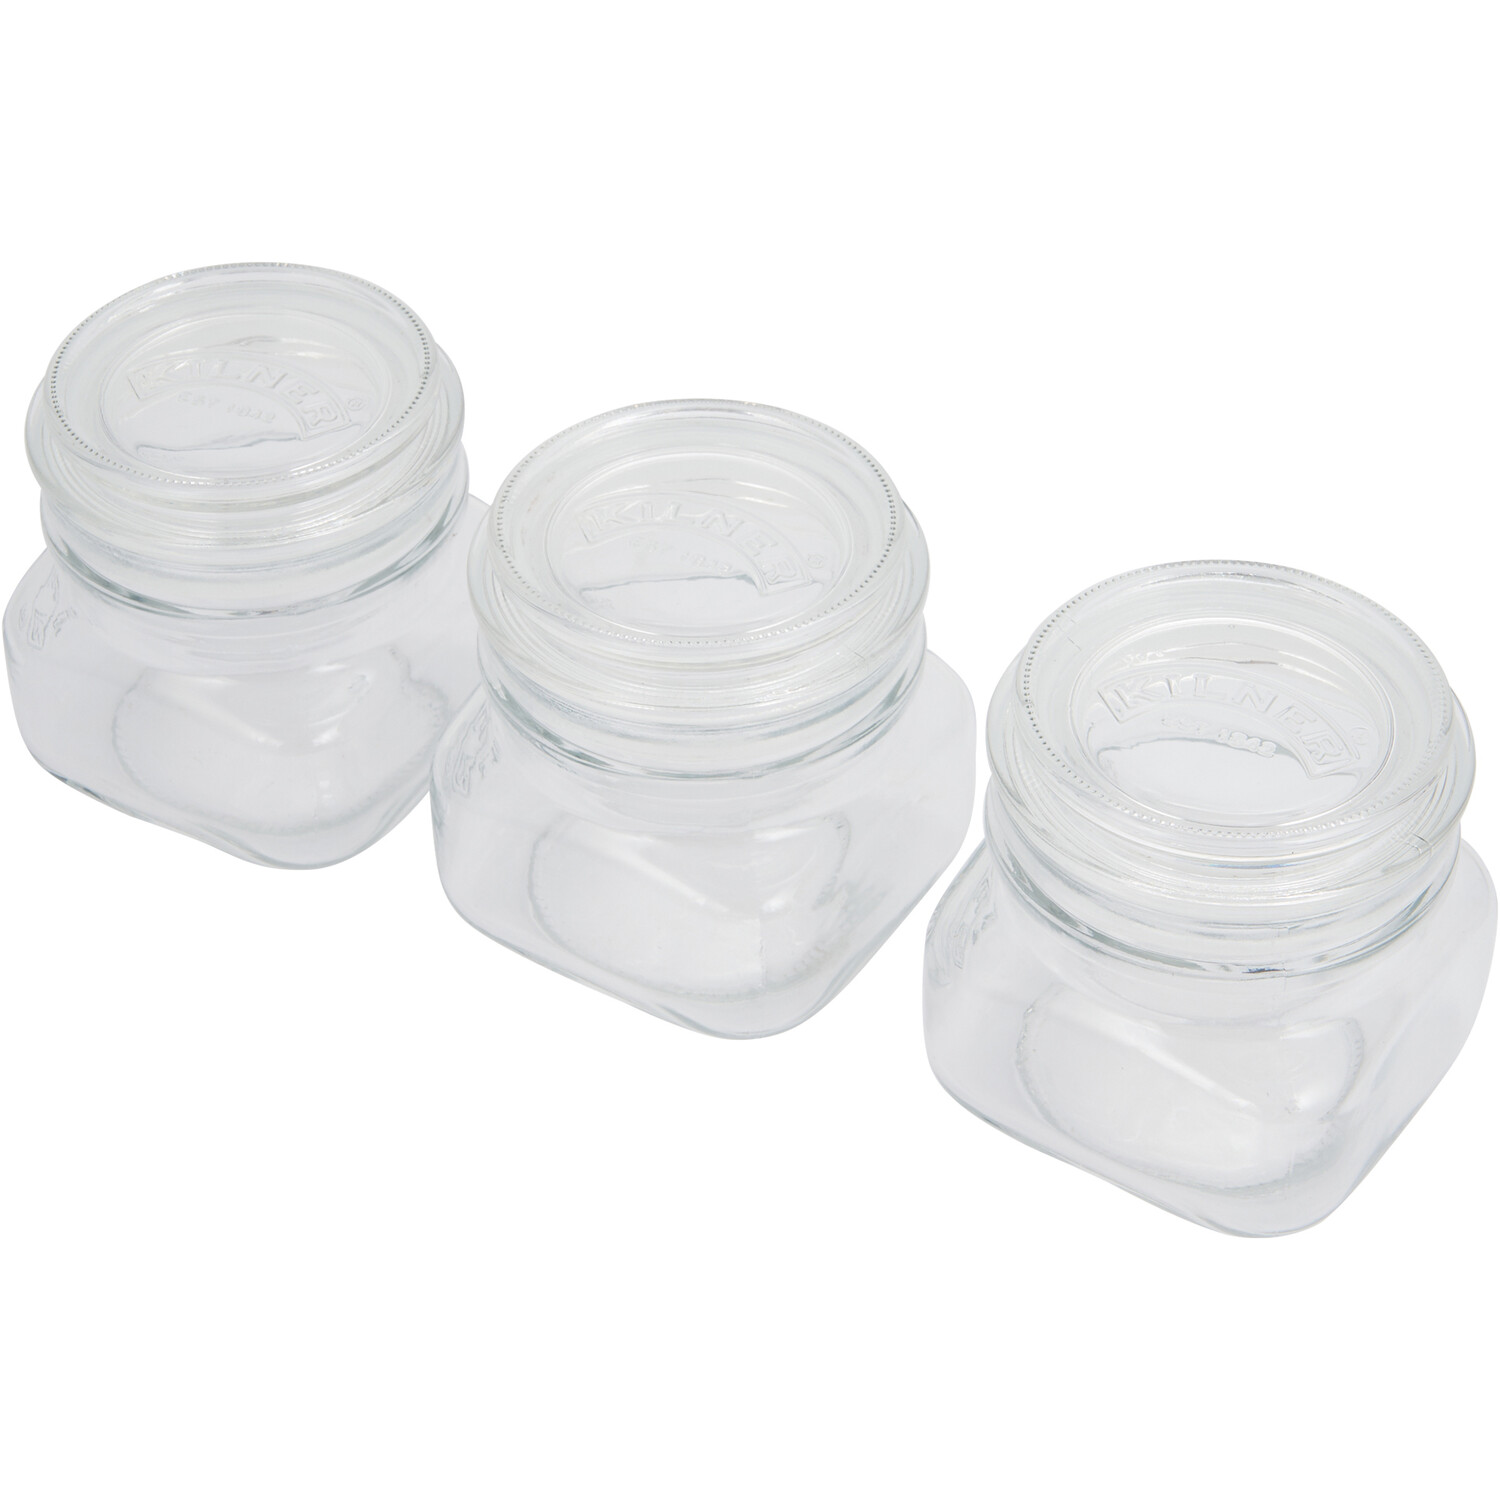 Kilner 250ml Square Glass Storage Jar with Push Top Lid 3 Pack Image 1